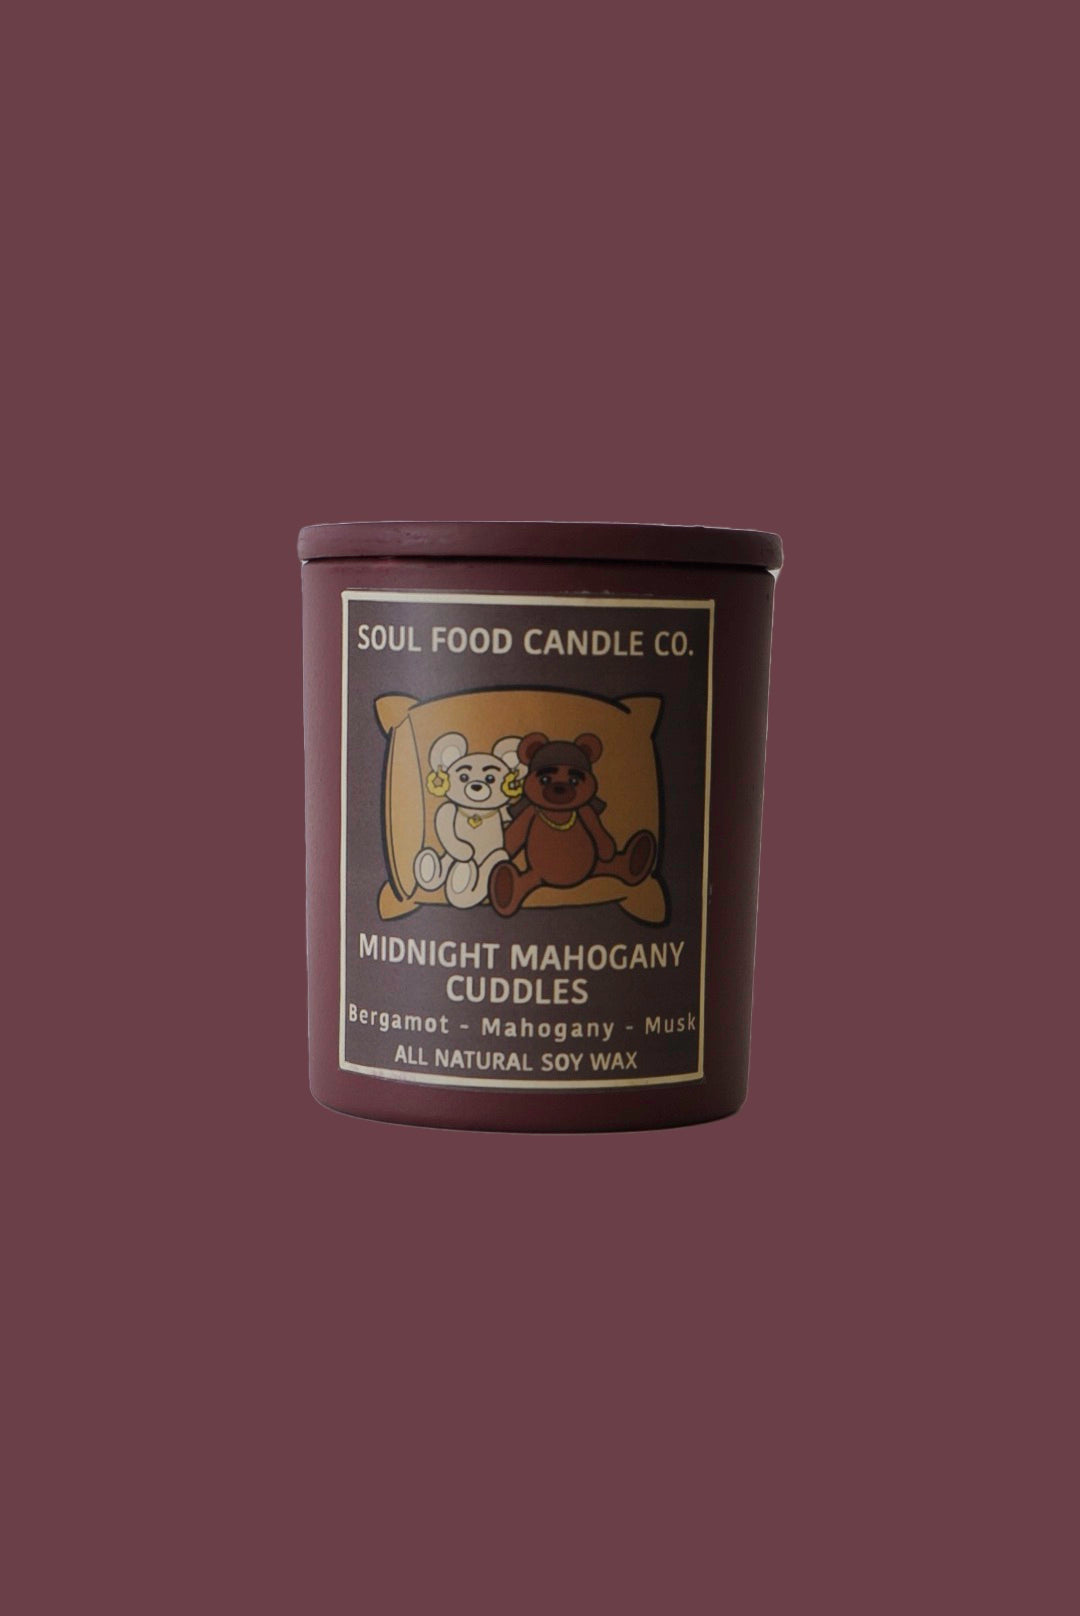 Midnight Mahogany Cuddles - Soul Food Candle Company